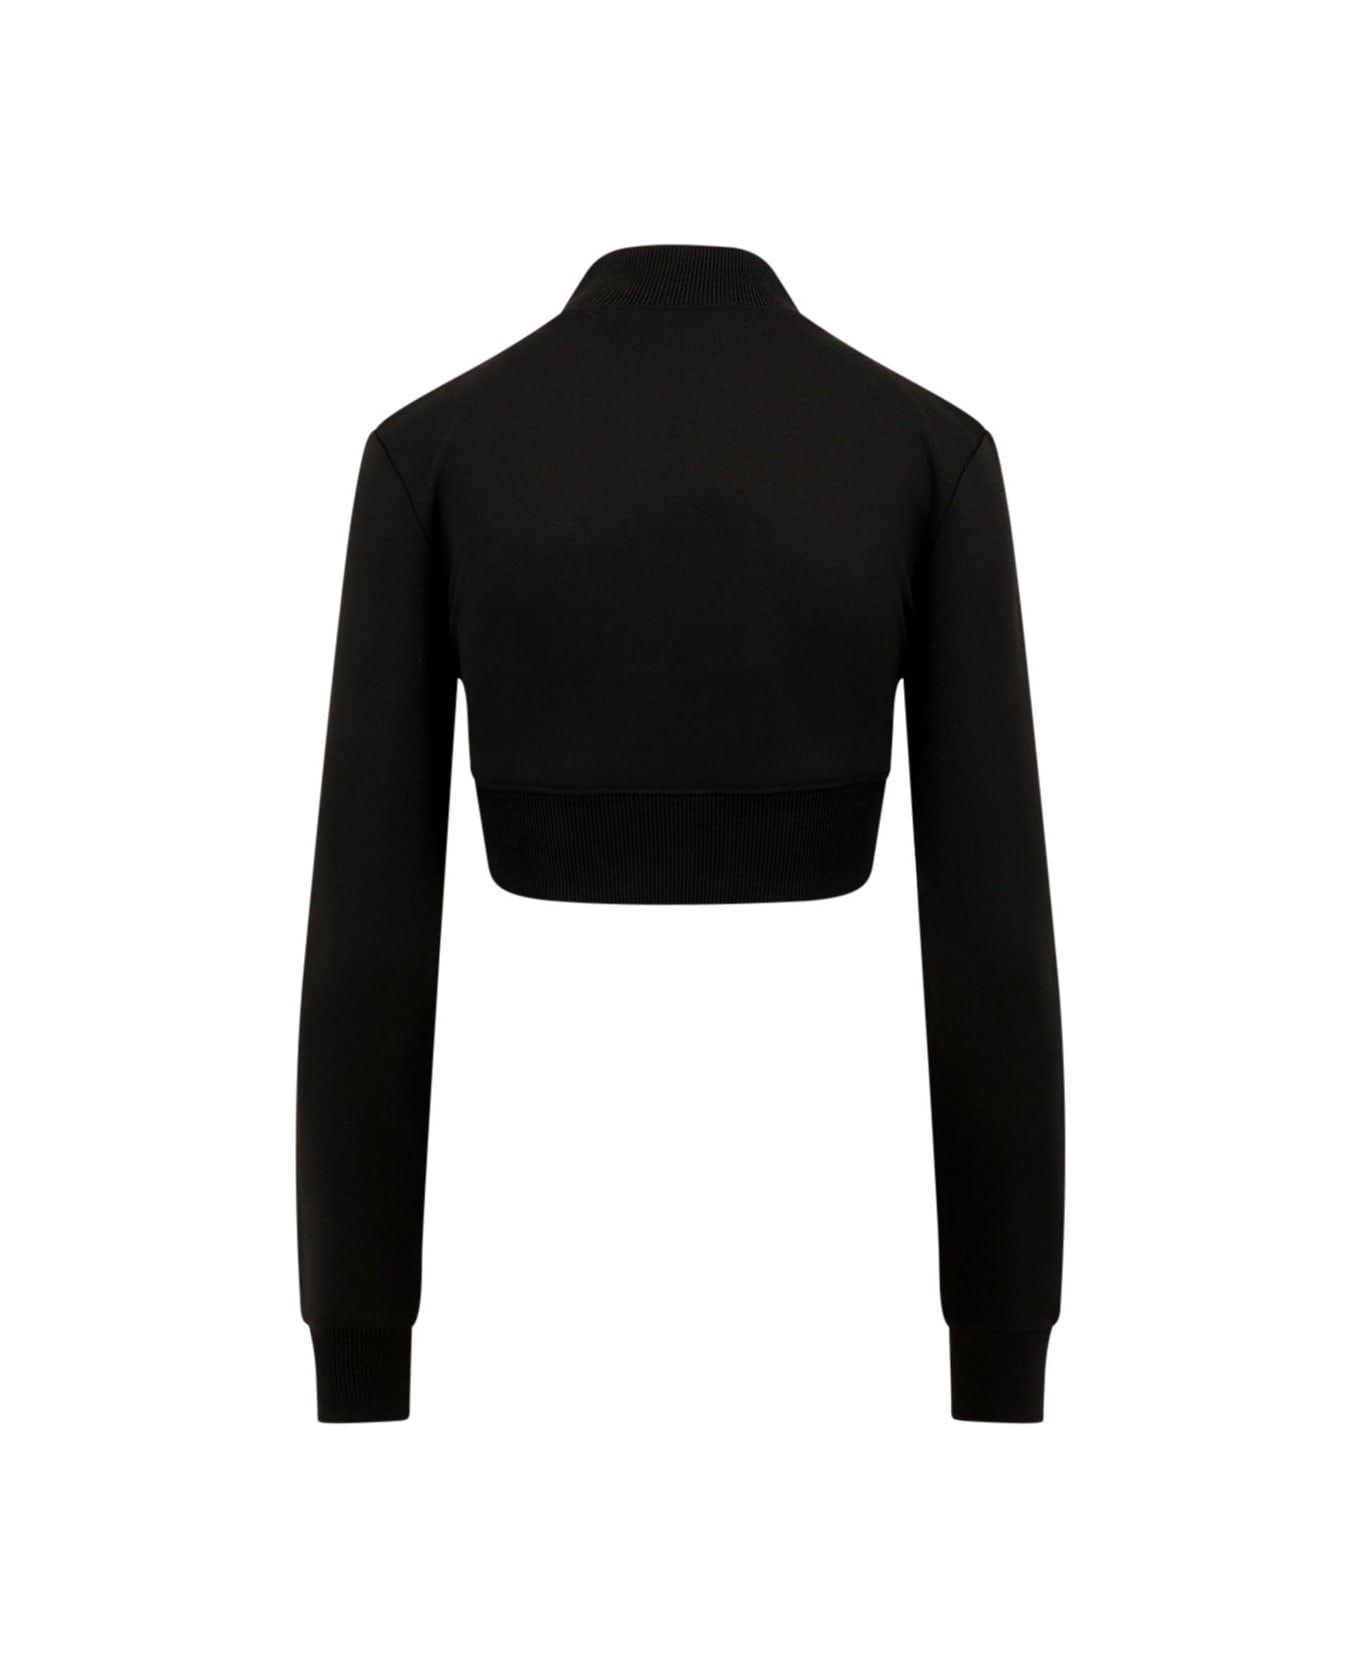 Courrèges Sweatshirt - Black ジャケット